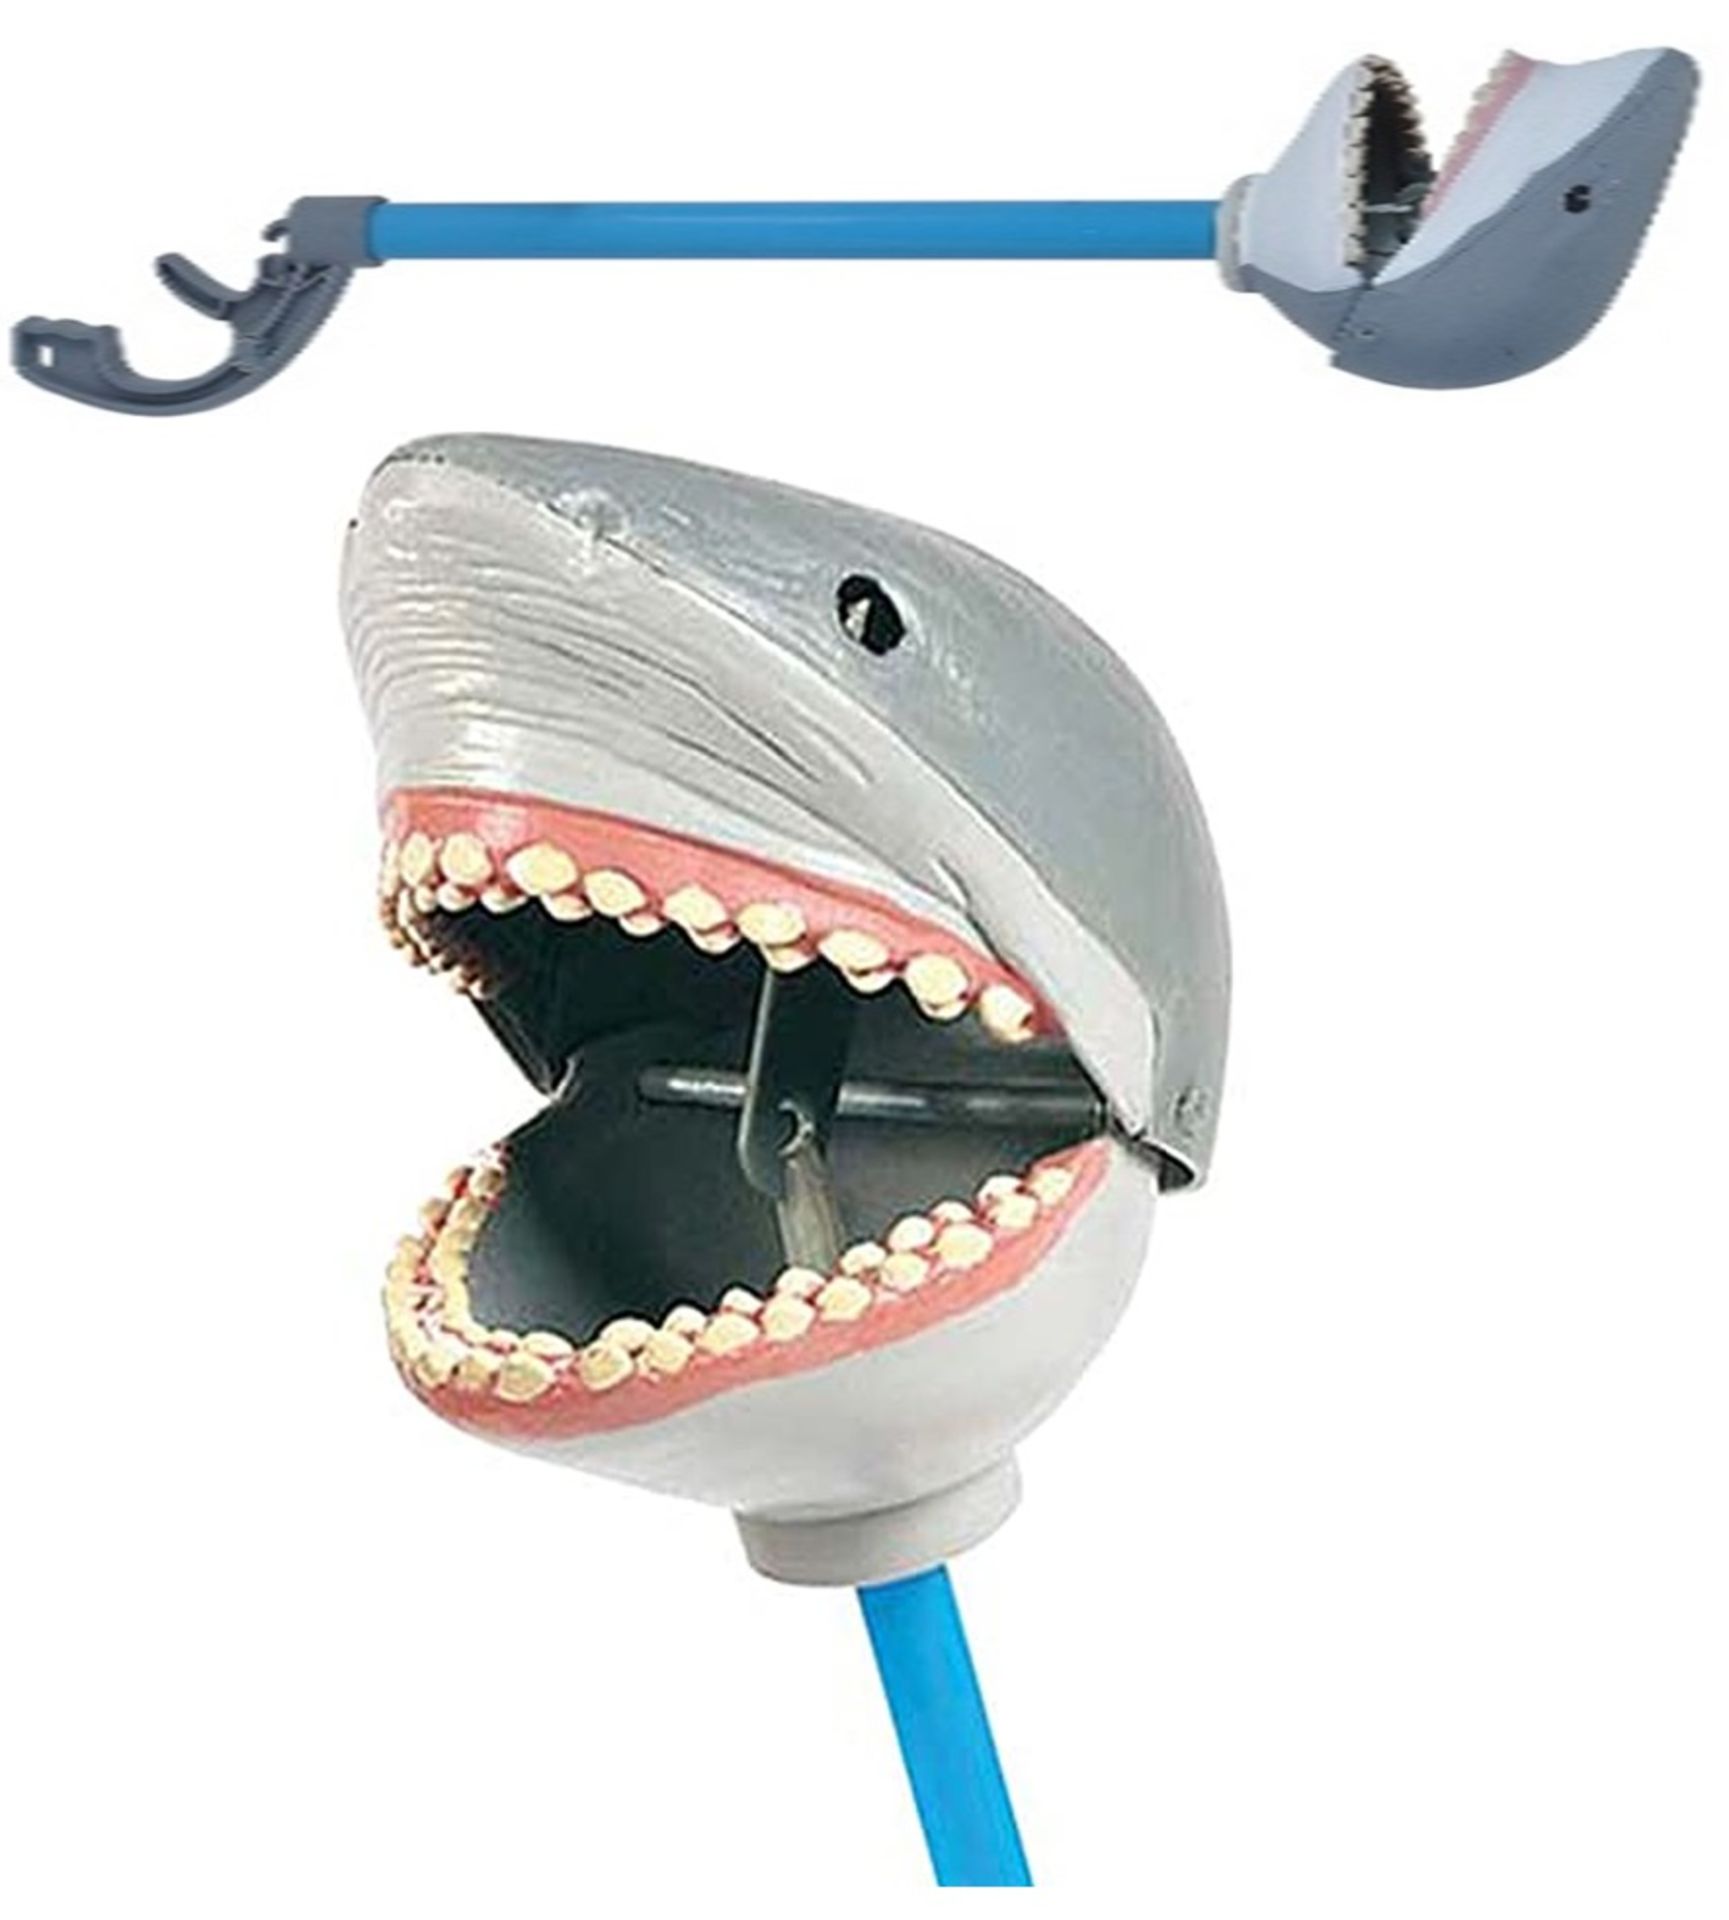 500 x Shark Pincer Novelty Toy | RRP £1,500